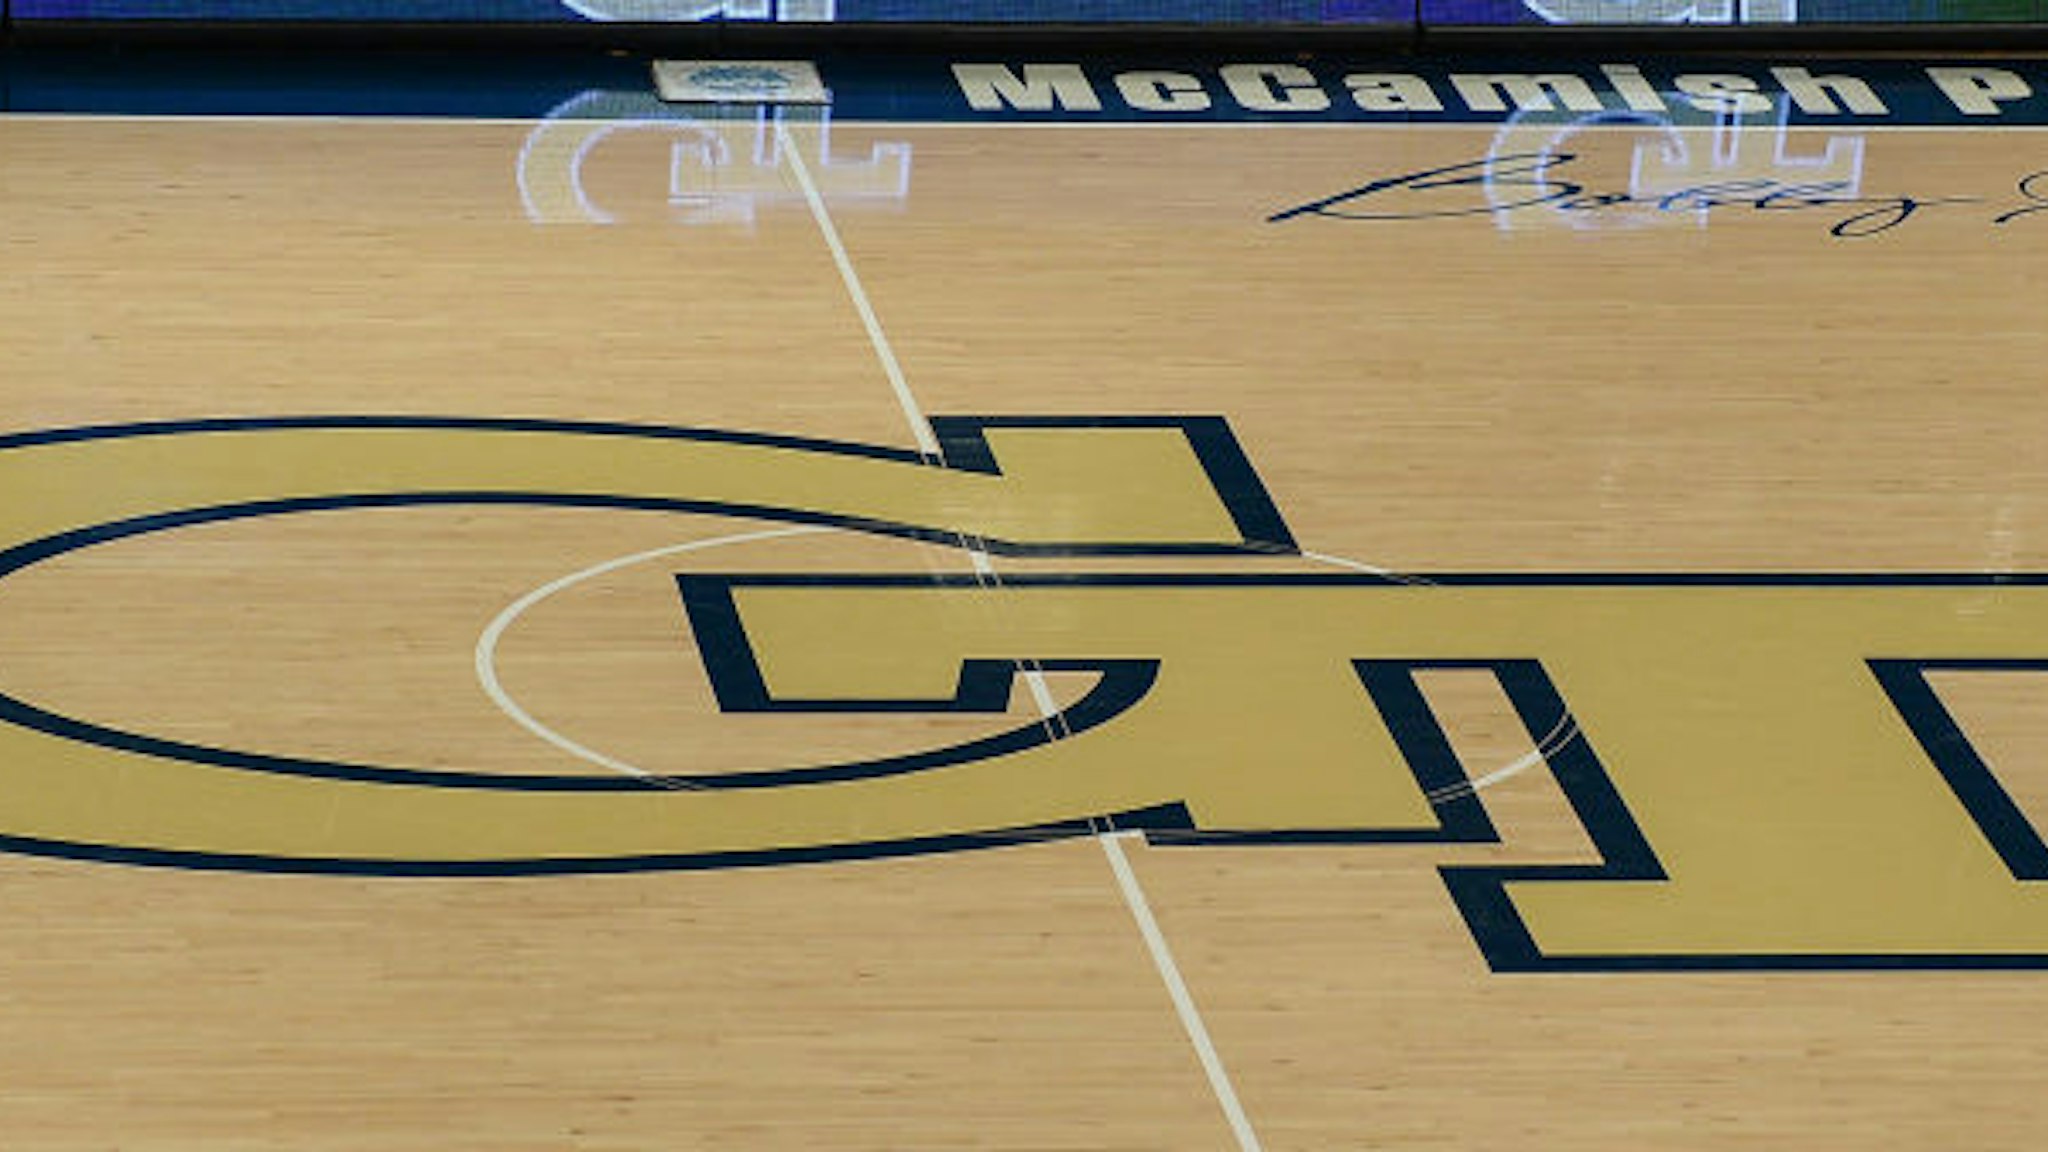 A shot of the Georgia Tech logo during the NCAA basketball game between the North Carolina Tar Heels and the Georgia Tech Yellow Jackets on December 30th, 2020 at Hank McCamish Pavilion in Atlanta, GA.